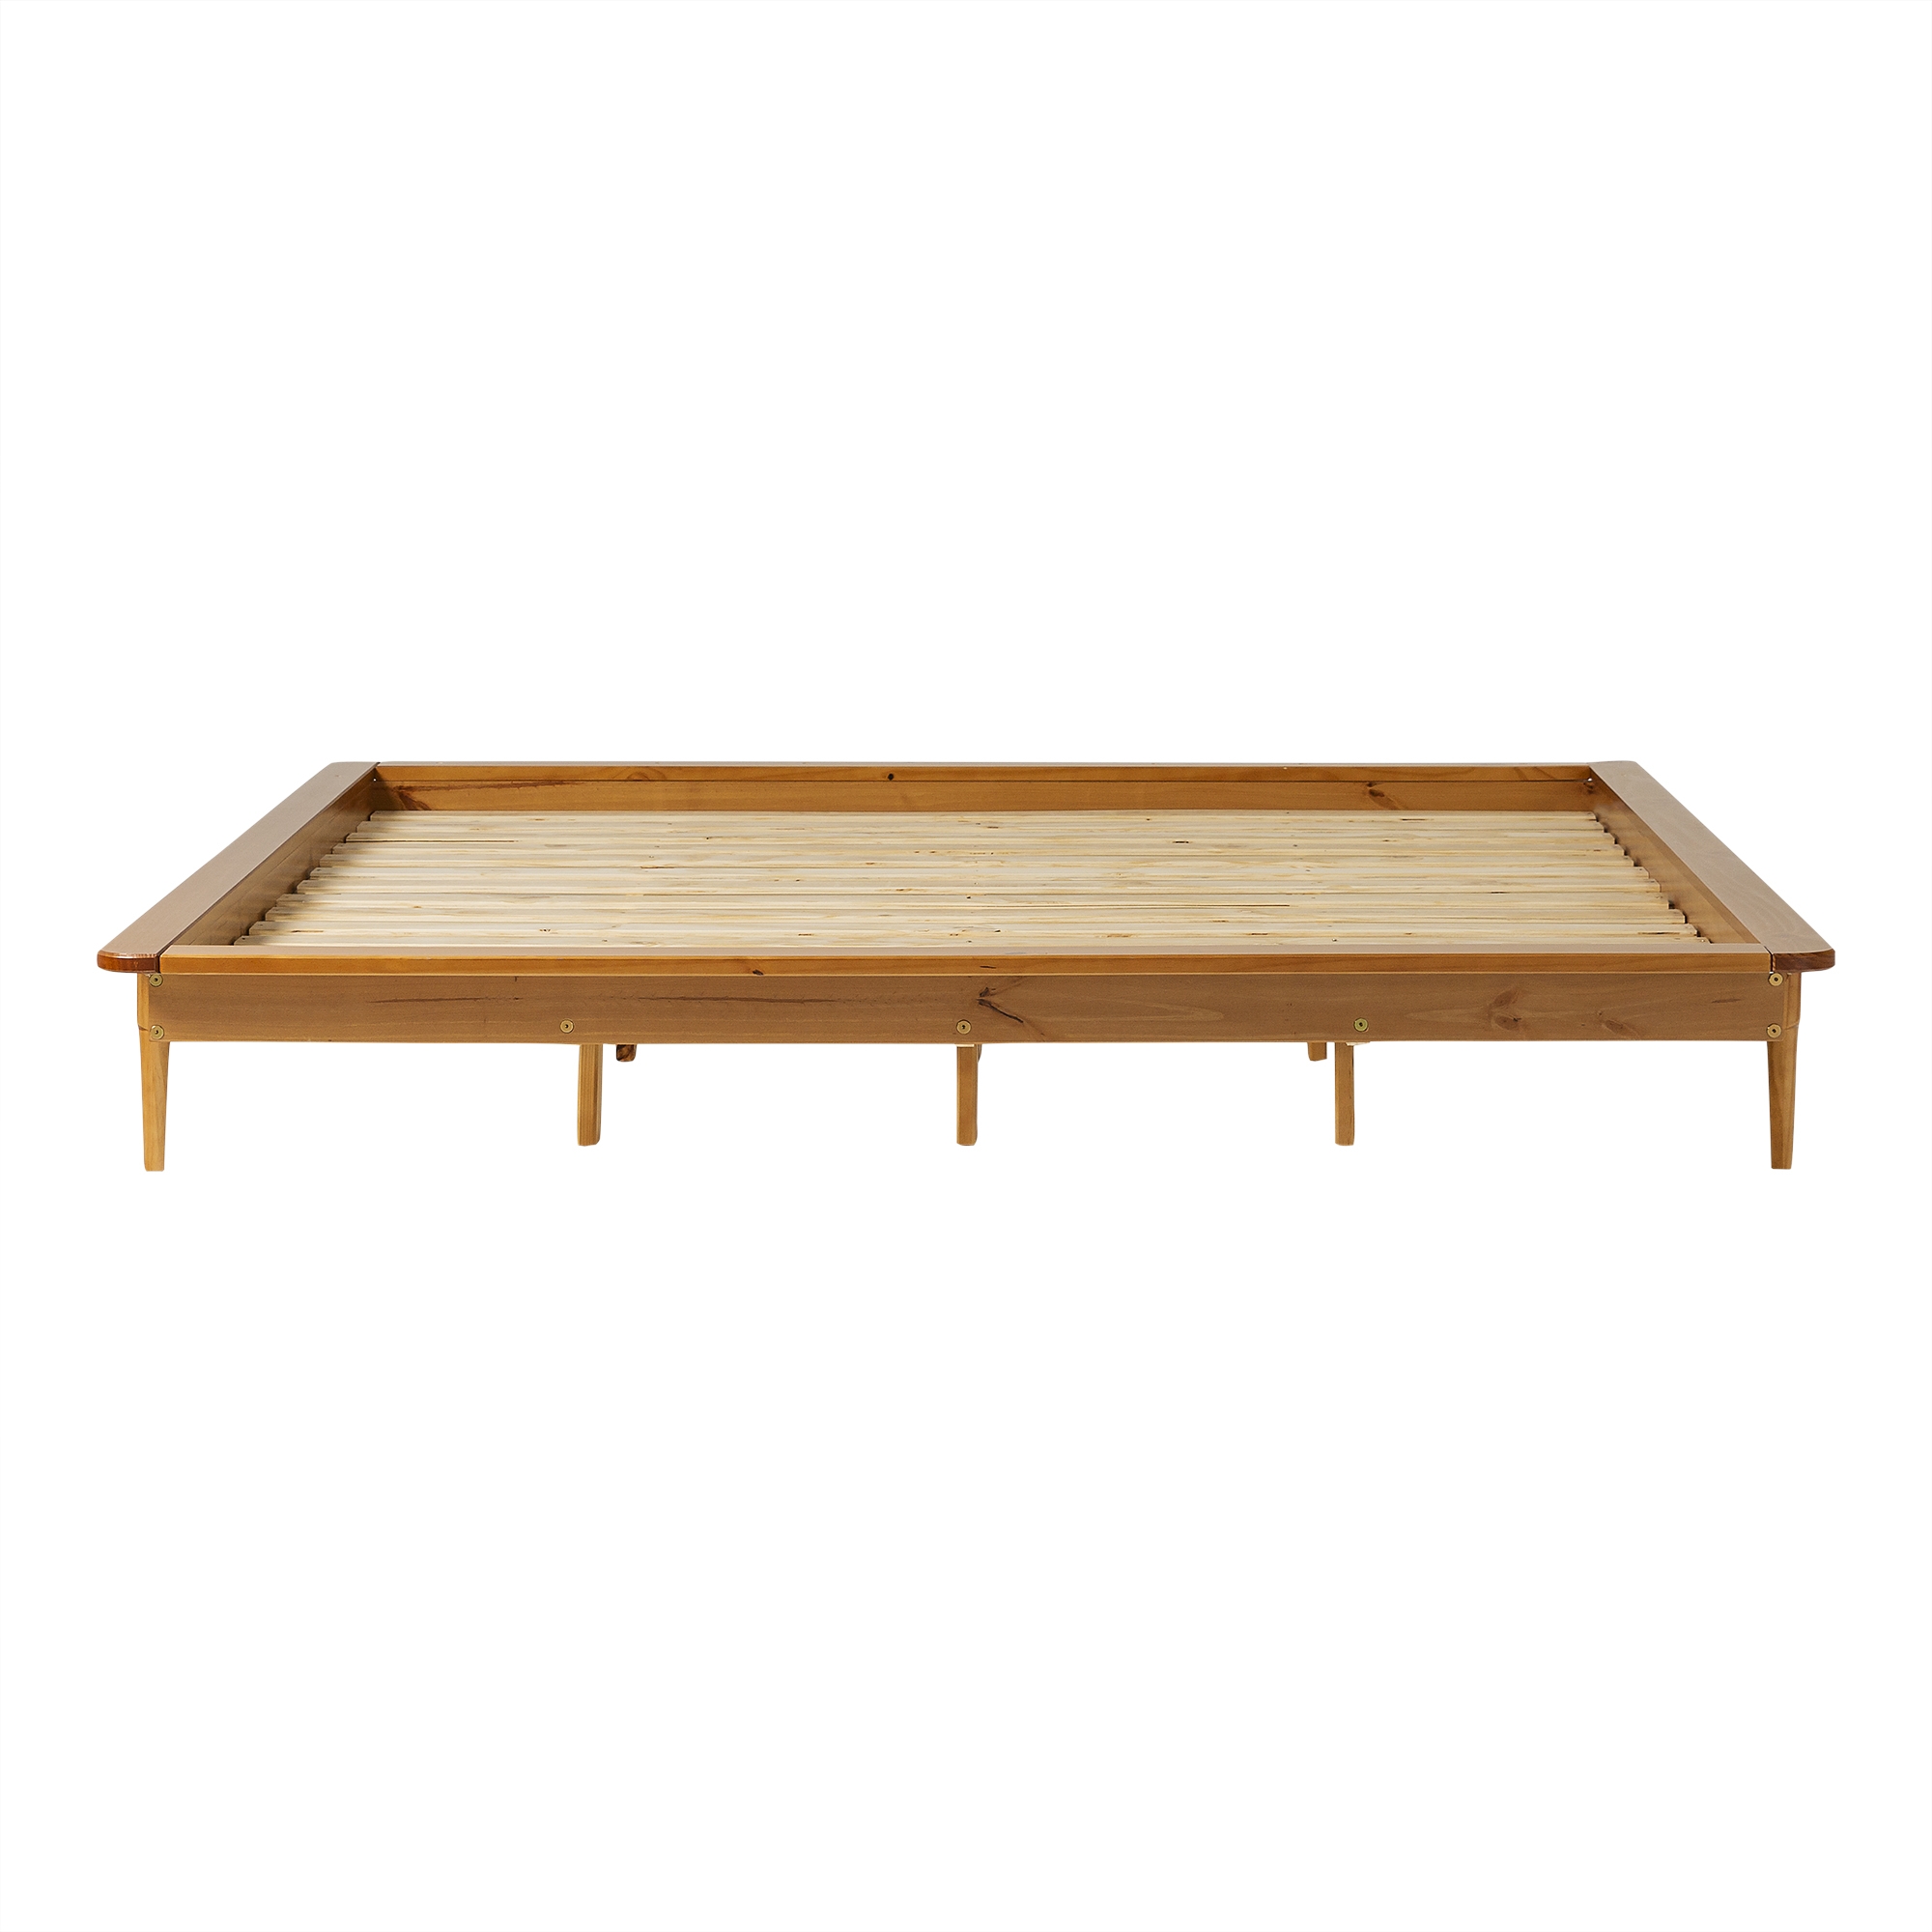 King Mid Century Modern Solid Wood Platform Bed - Caramel - Image 1